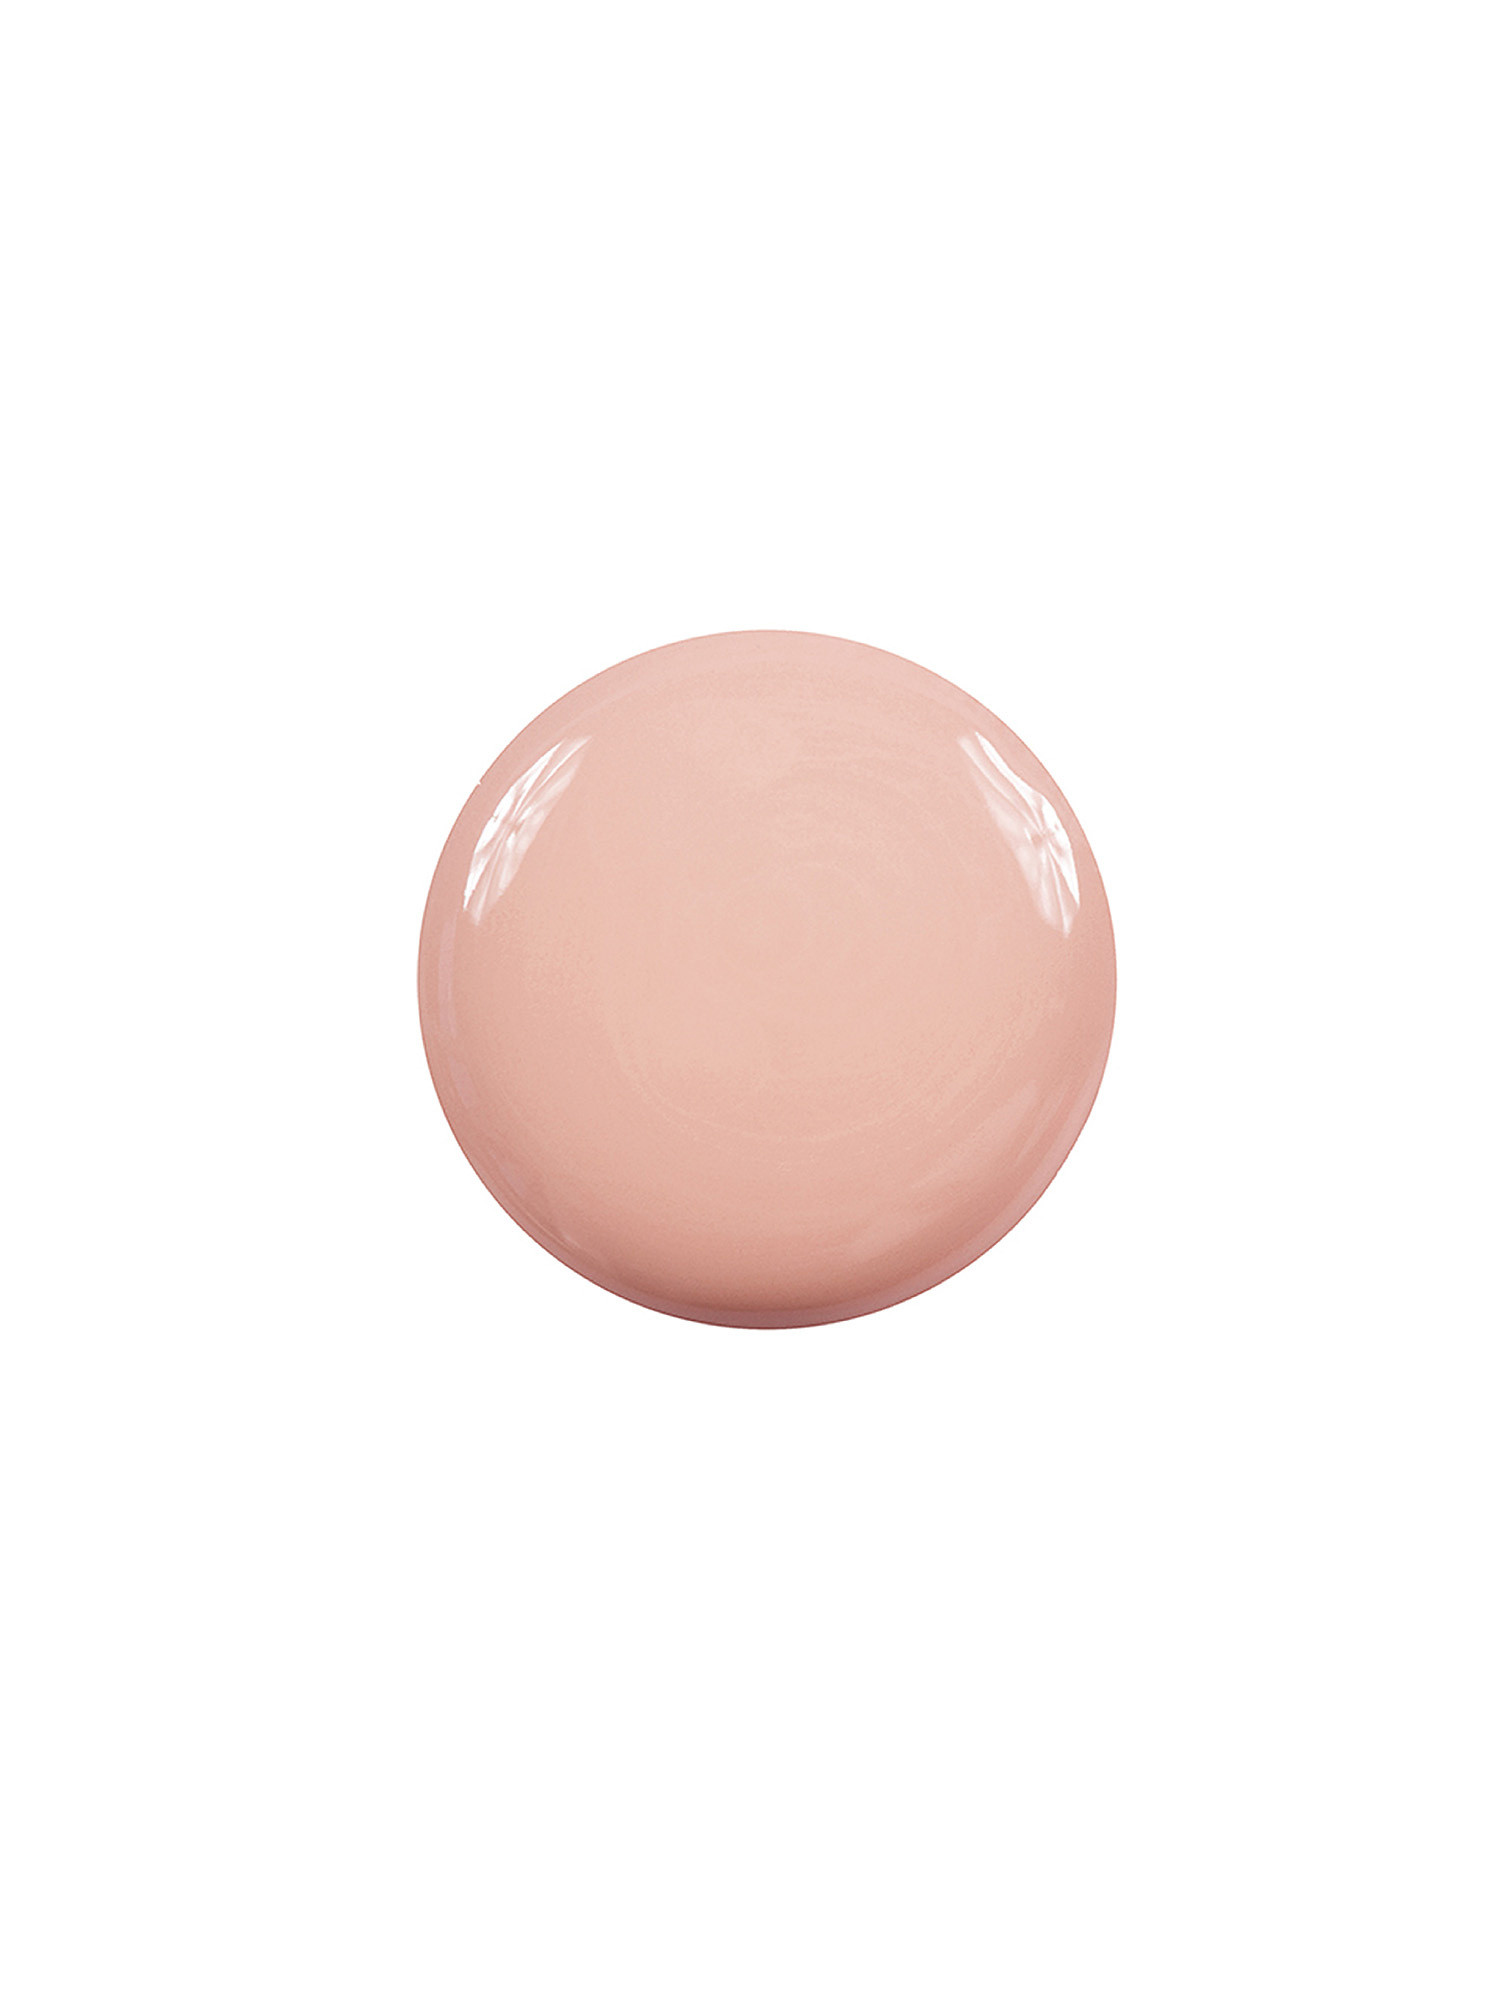 Nail Polish - 208 magnetic naked, Light Pink, large image number 1